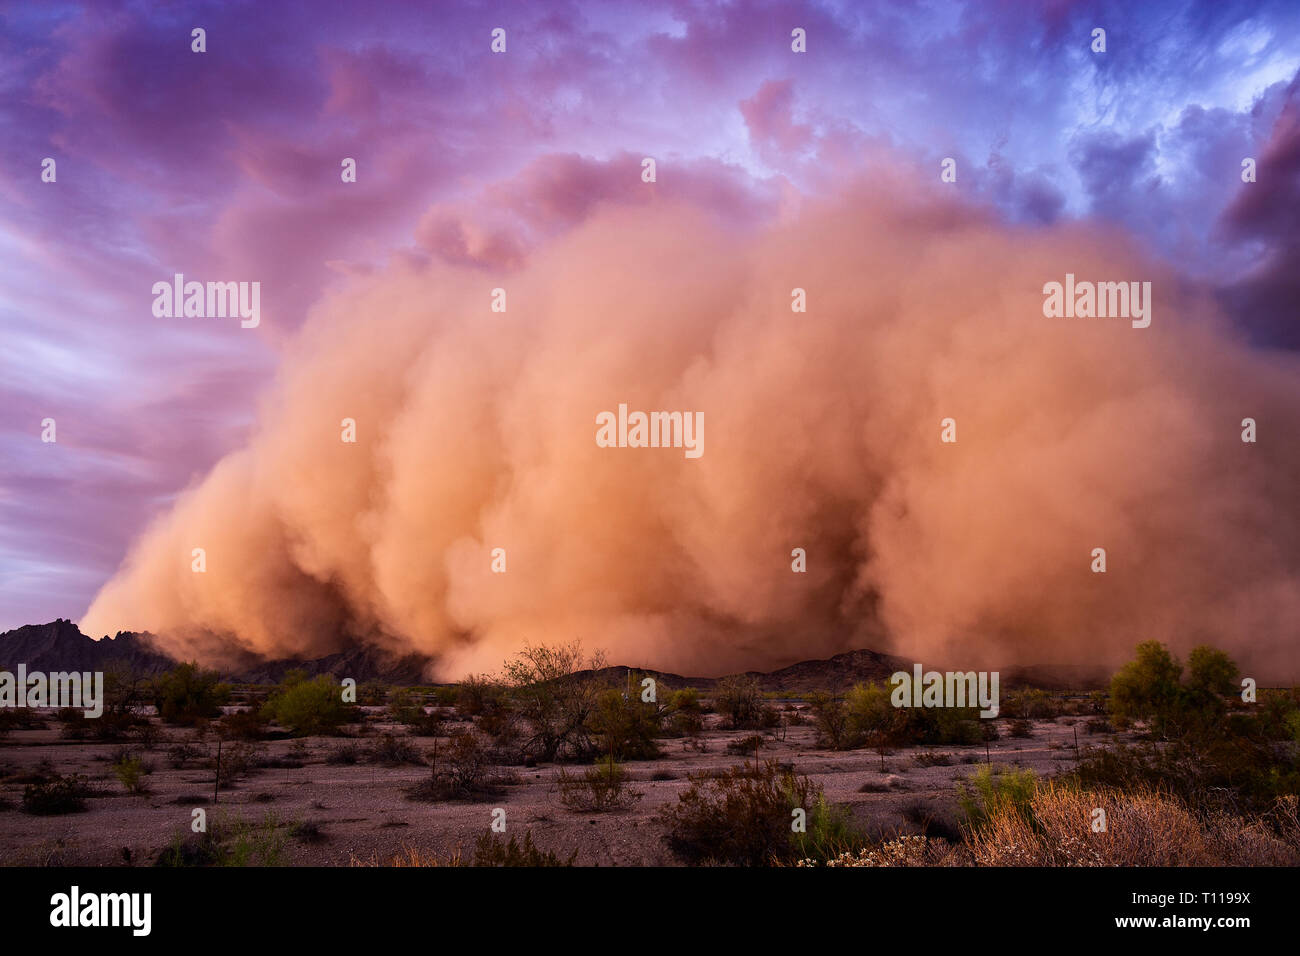 Haboob dust storm in the desert at sunset near Tacna, Arizona Stock Photo